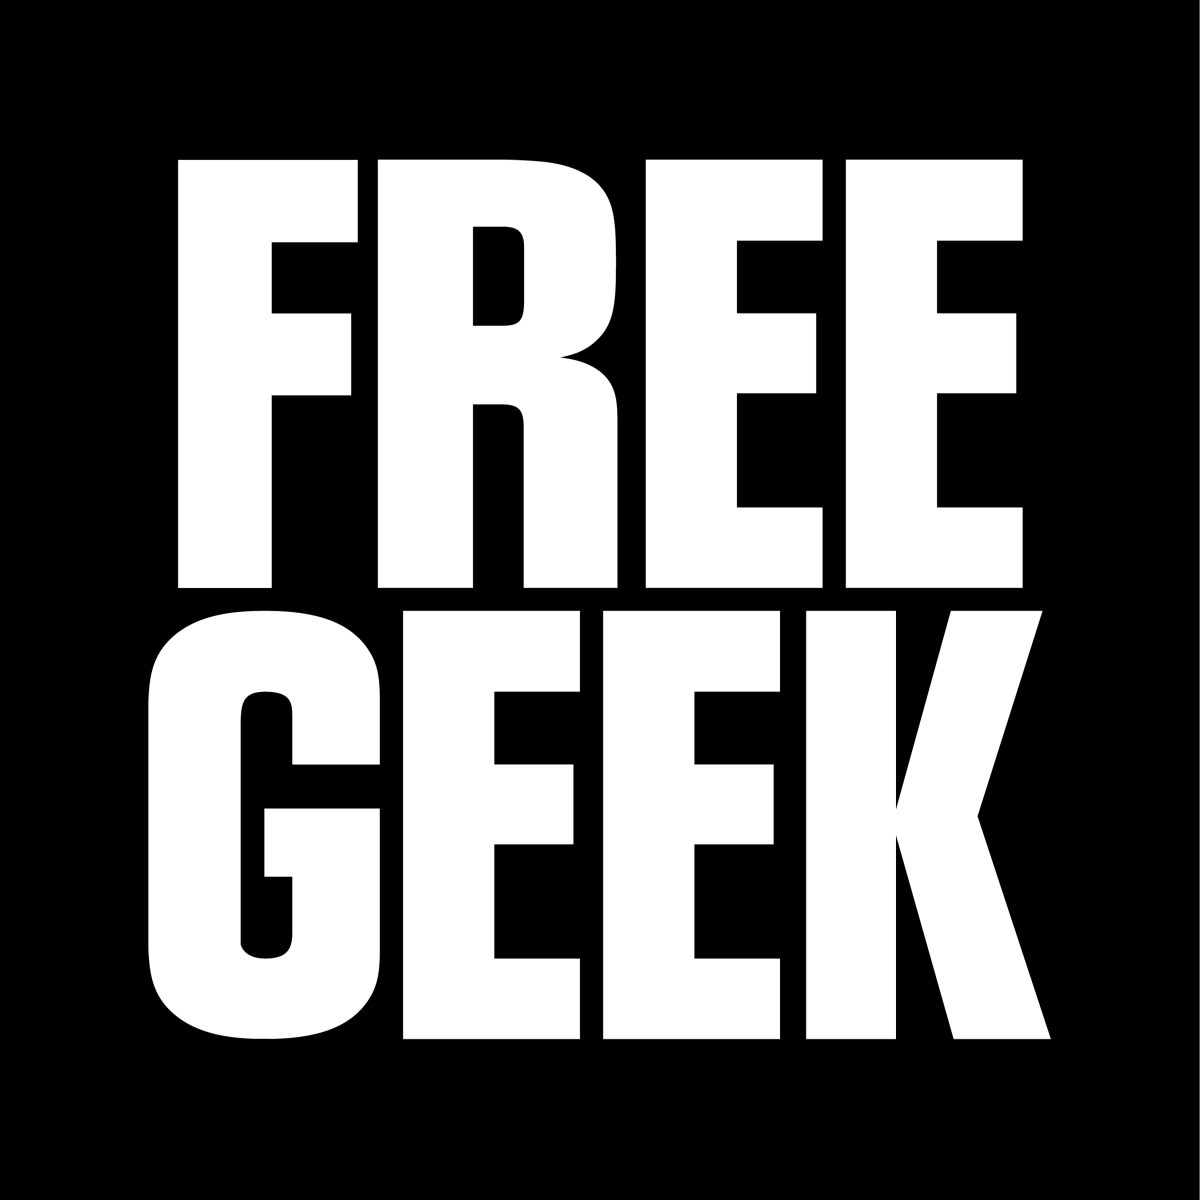 FreeGeek logo